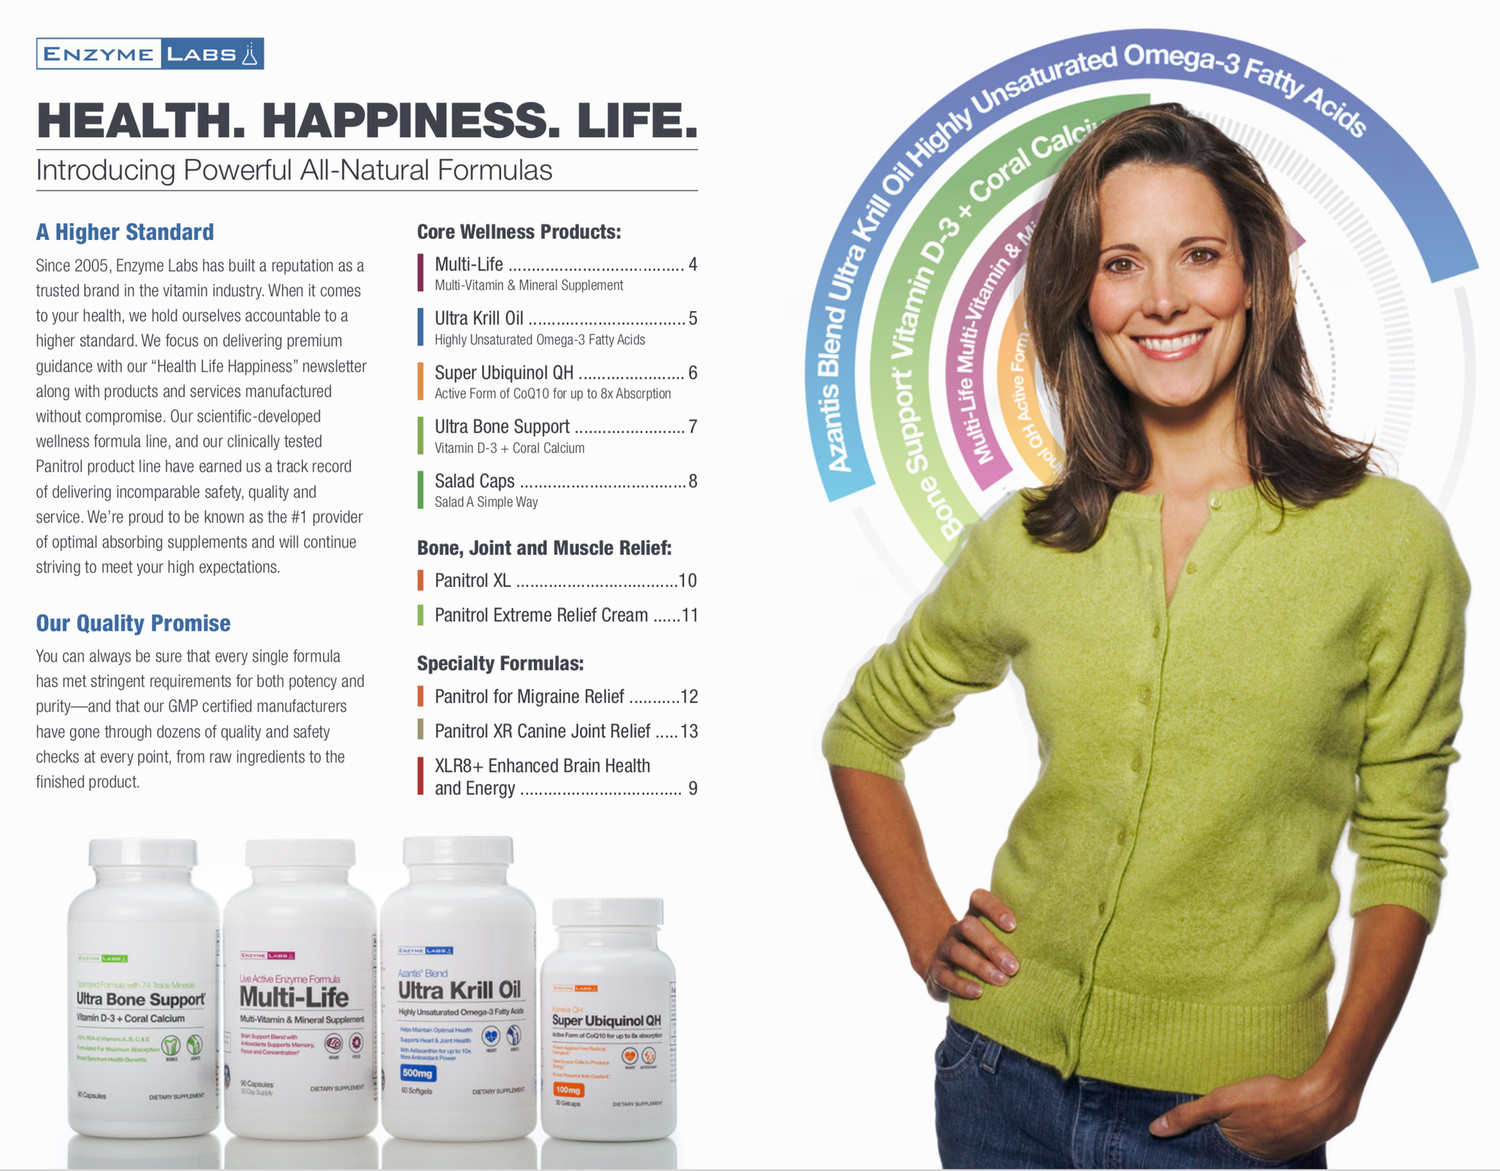 "Health Happiness Life"